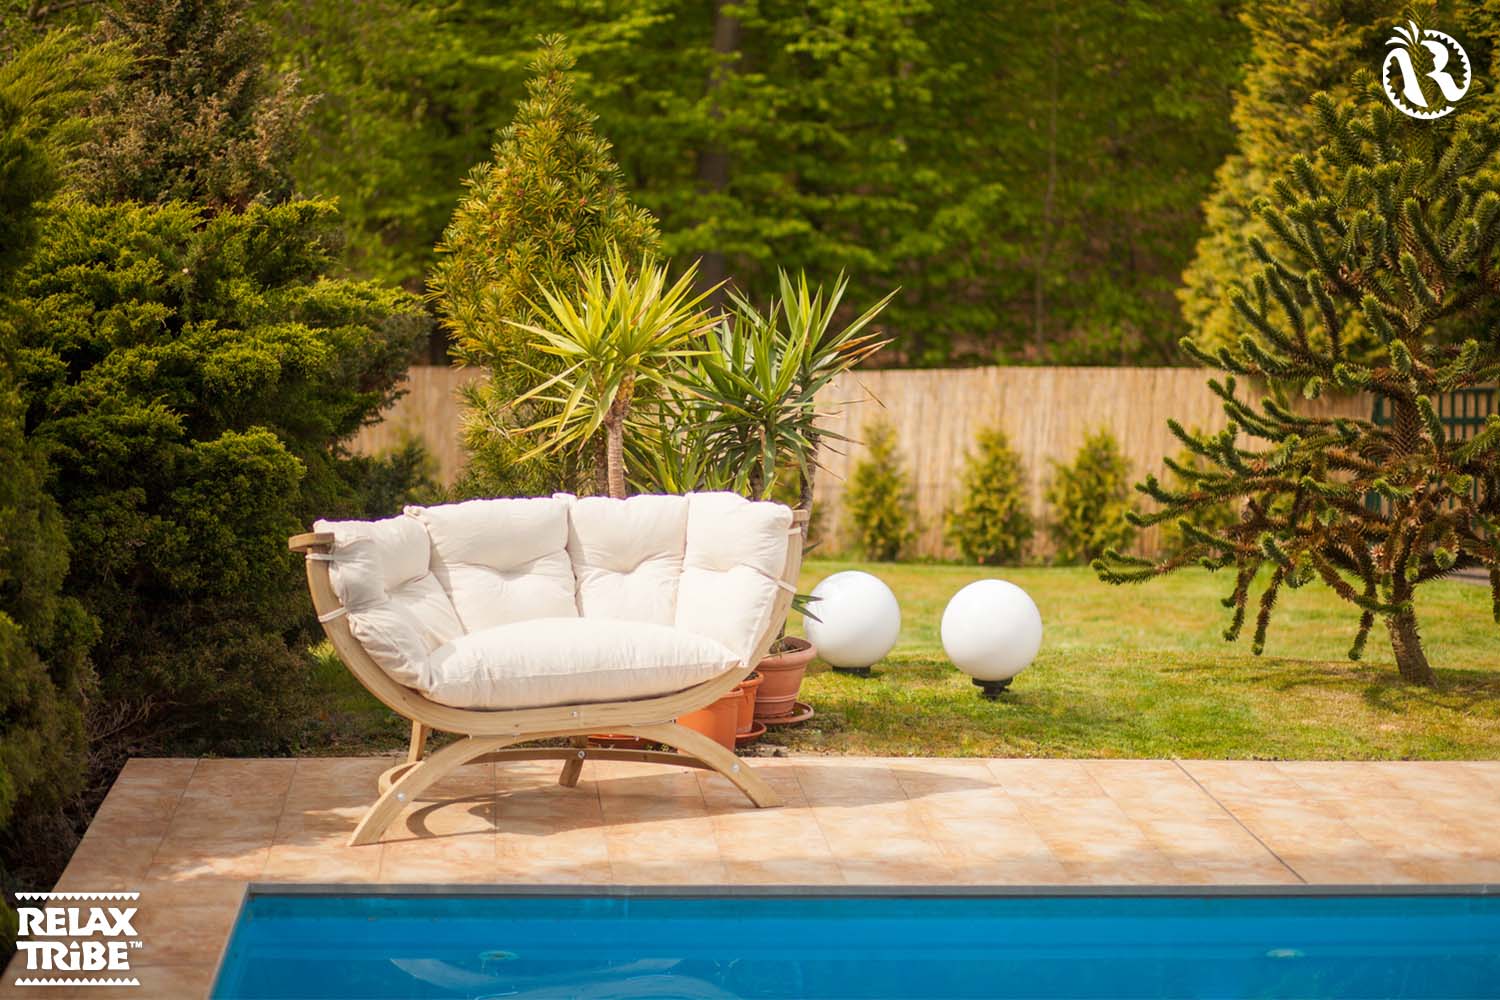 siena-due-natura-double-family-home-garden-xl-lounge-sofa-fsc-wood-cushion-weatherproof-white-cream-pool-patio-decor